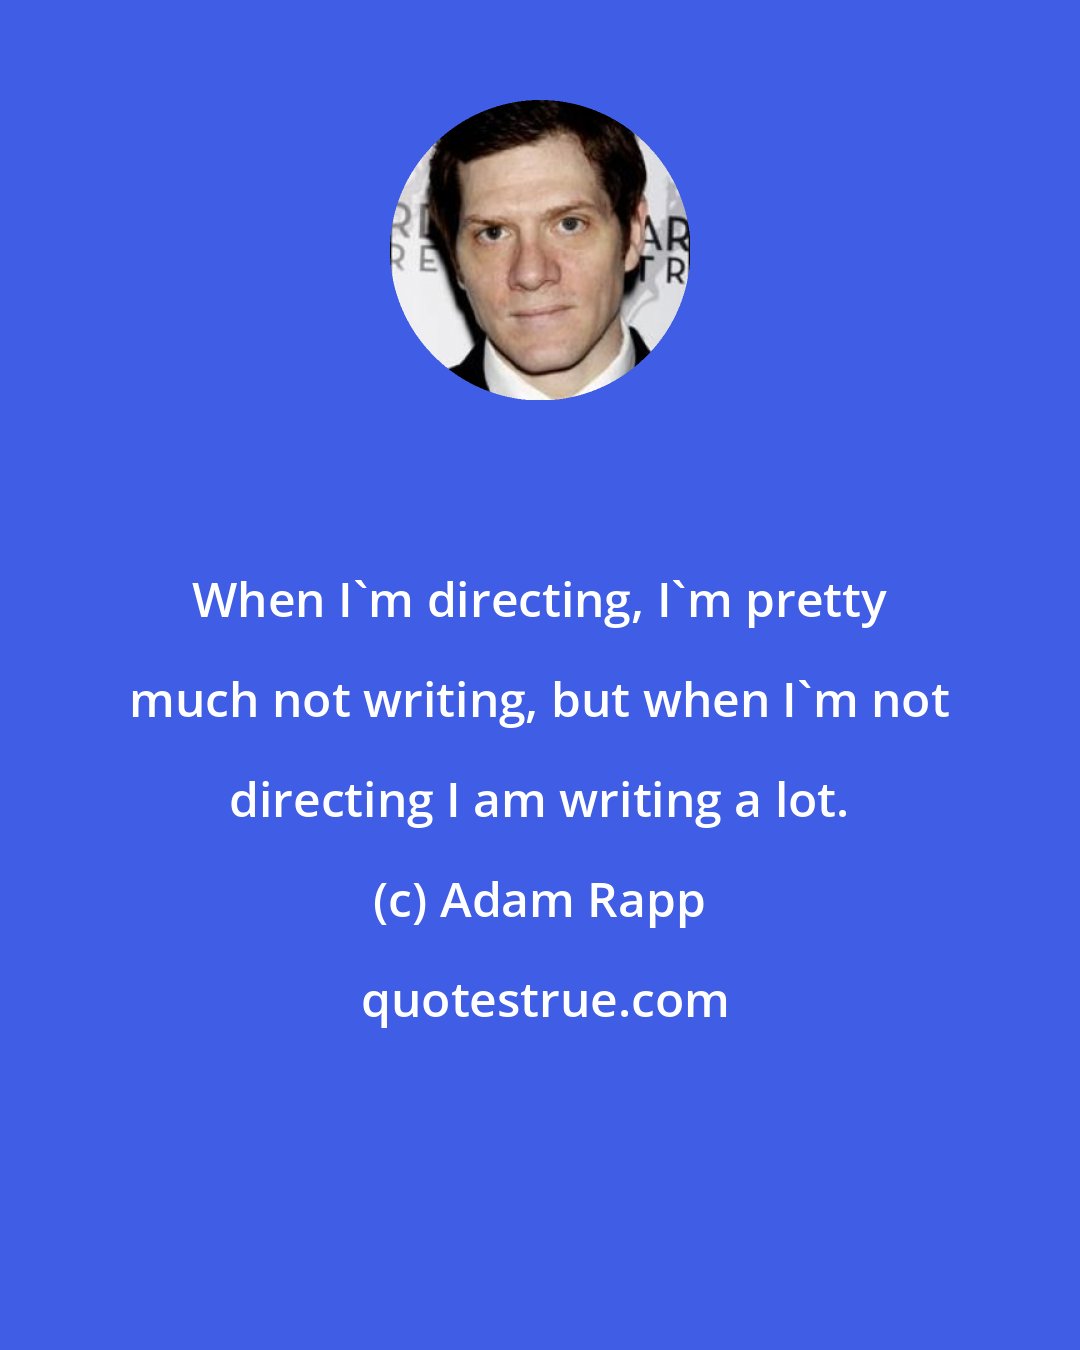 Adam Rapp: When I'm directing, I'm pretty much not writing, but when I'm not directing I am writing a lot.